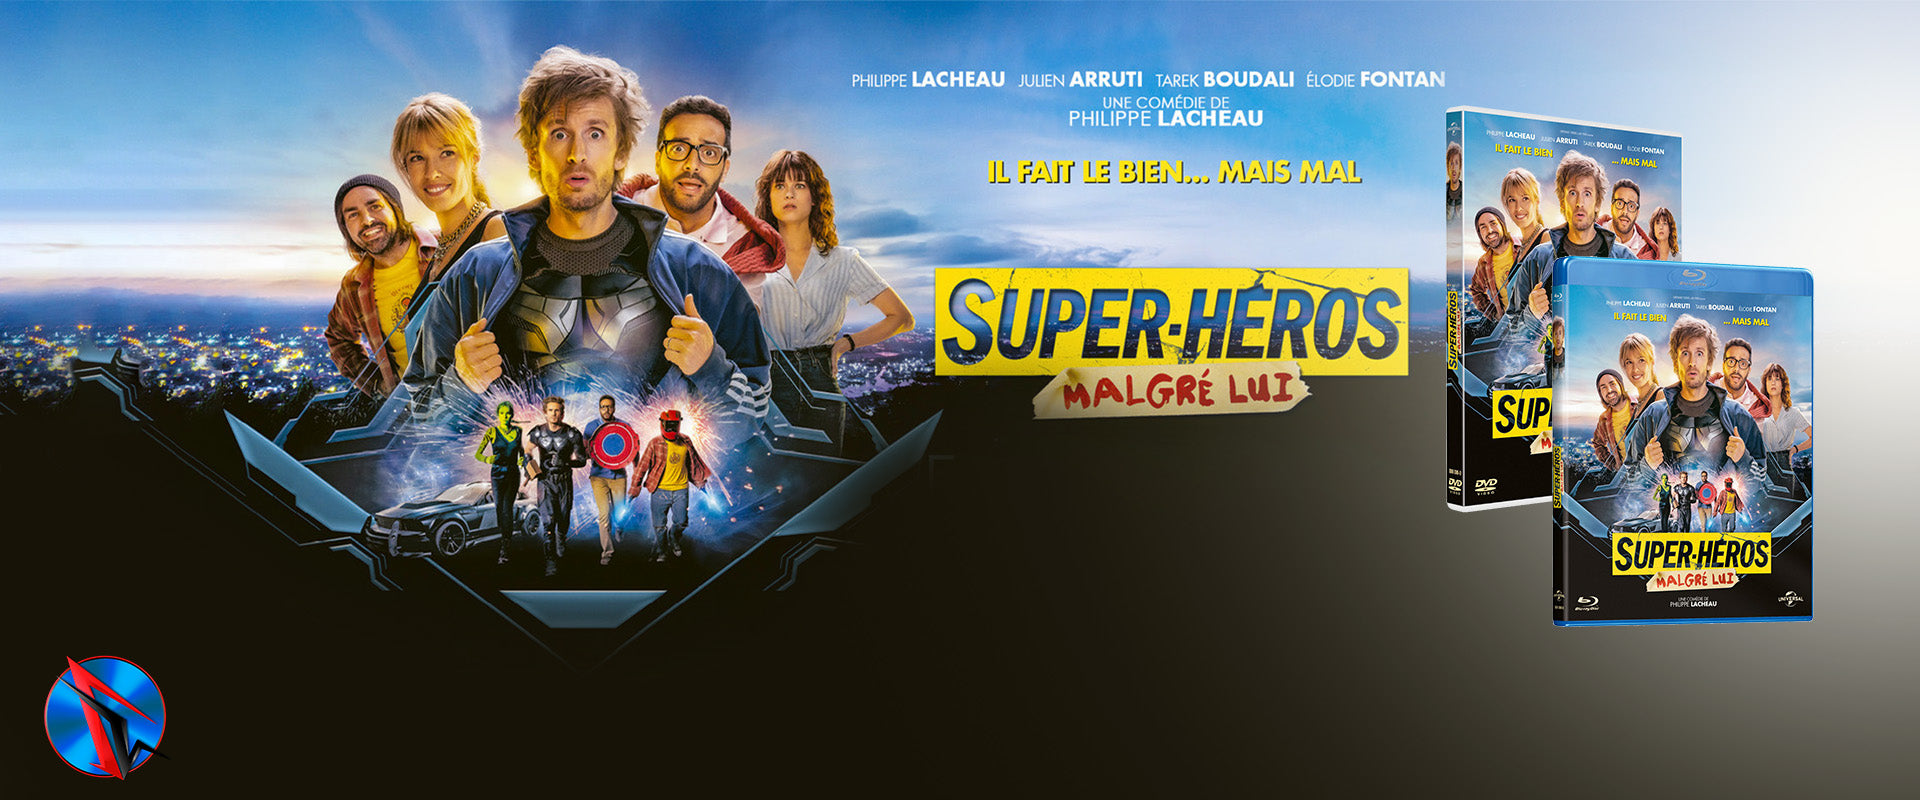 super héros malgré lui en DVD et Blu ray